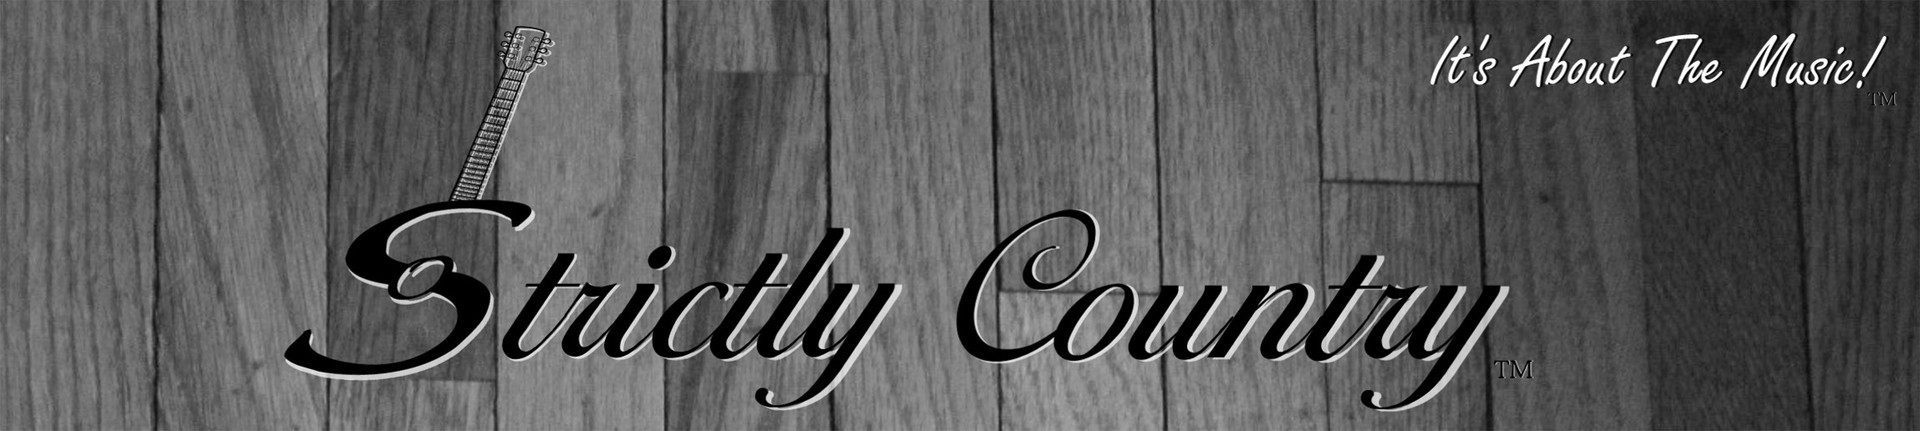 Strictly Country Magazine logo